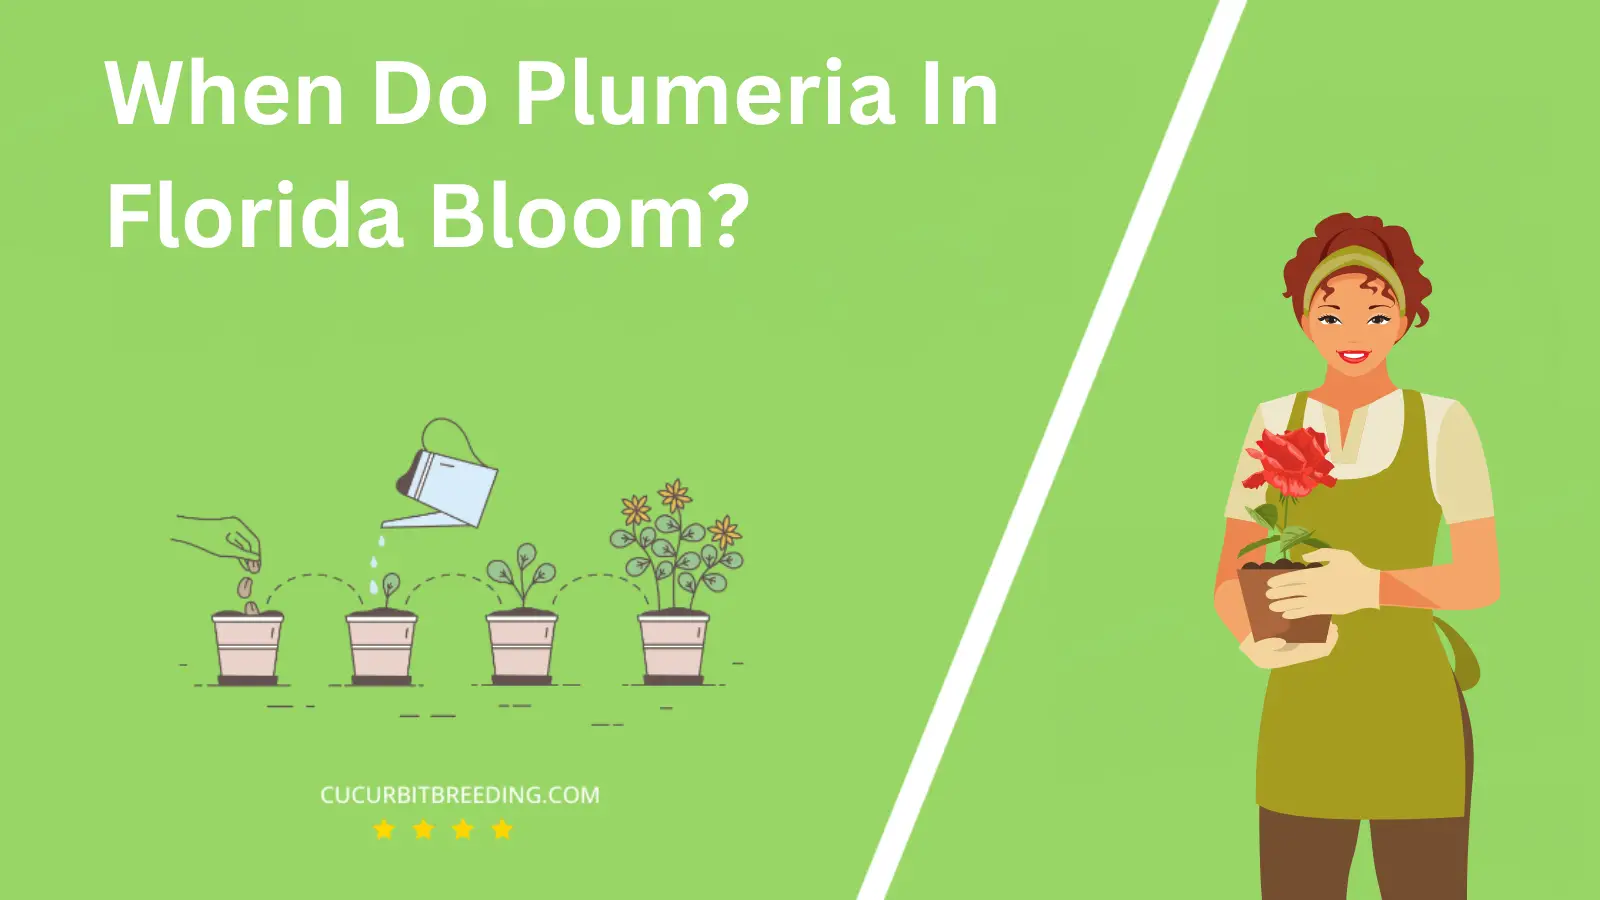 When Do Plumeria In Florida Bloom?